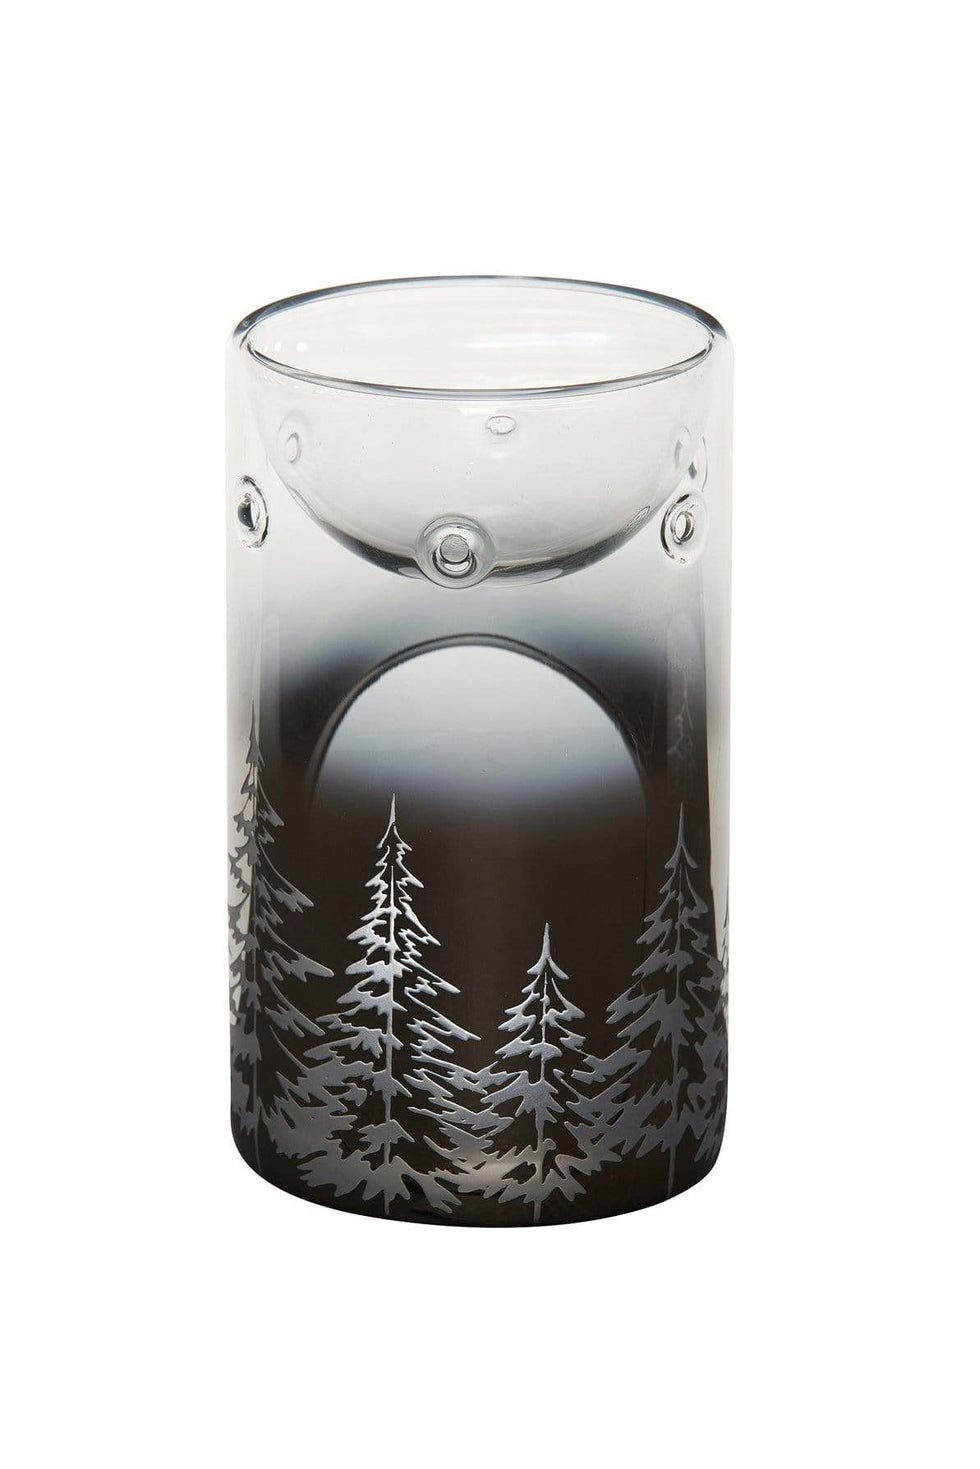 Yankee Candle Melt Warmer / Burner - Snowy Gatherings Winter Trees ...